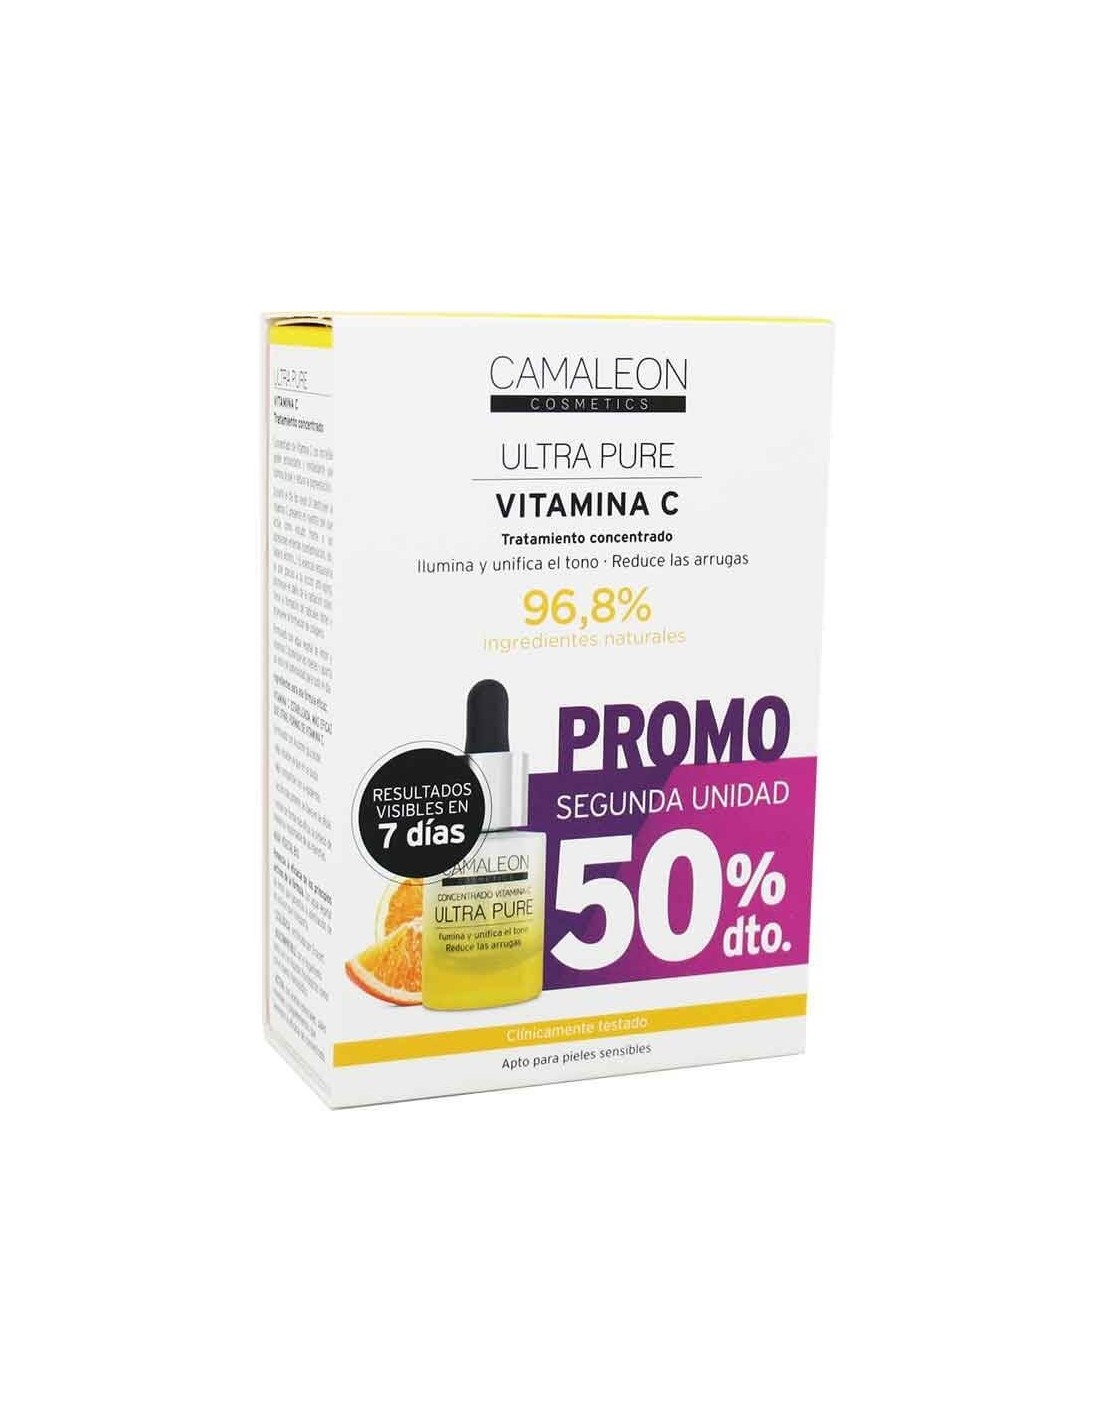 Camaleon Ultra Pure Vitamina C Duplo 2x30ml